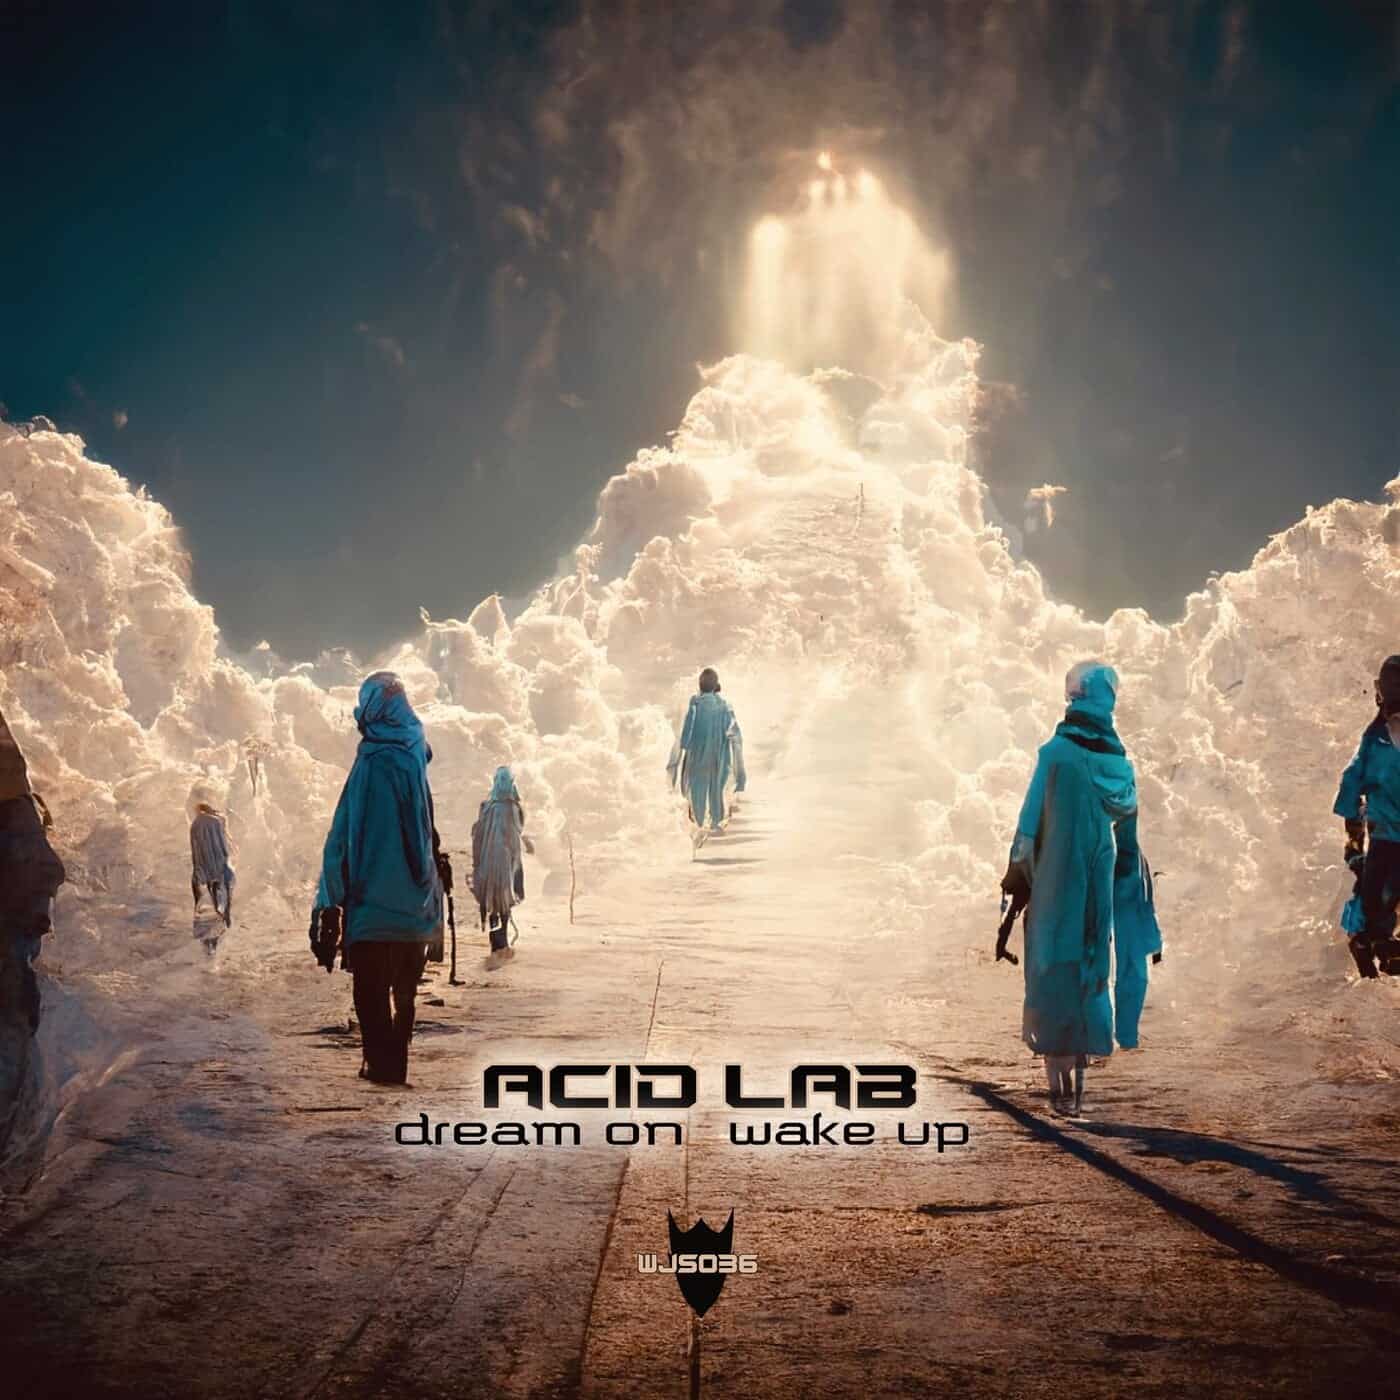 image cover: Acid Lab - Dream On/Wake Up / WJS036